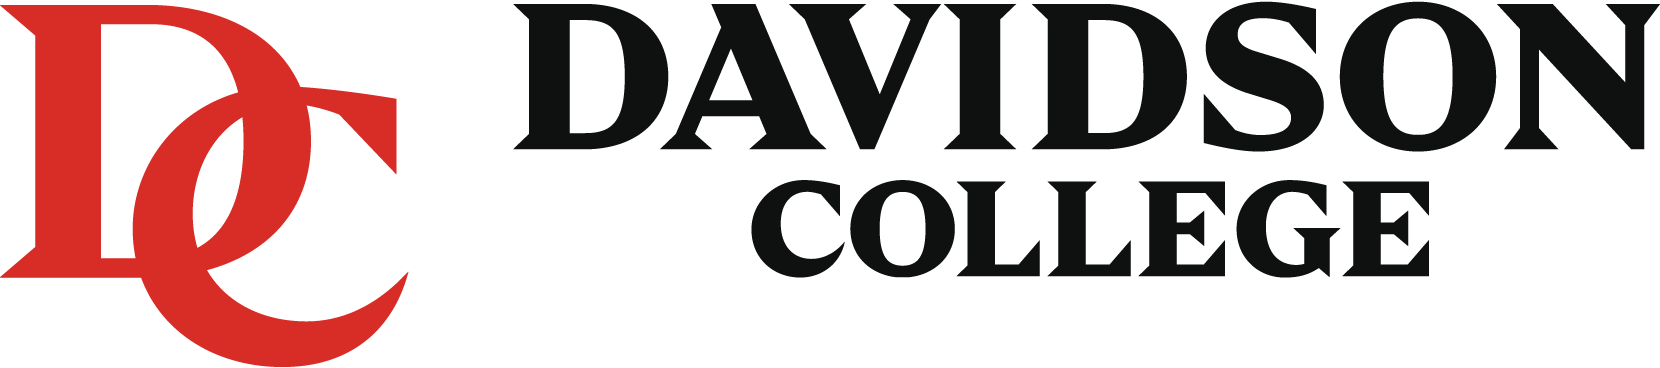 davidson-header-logo